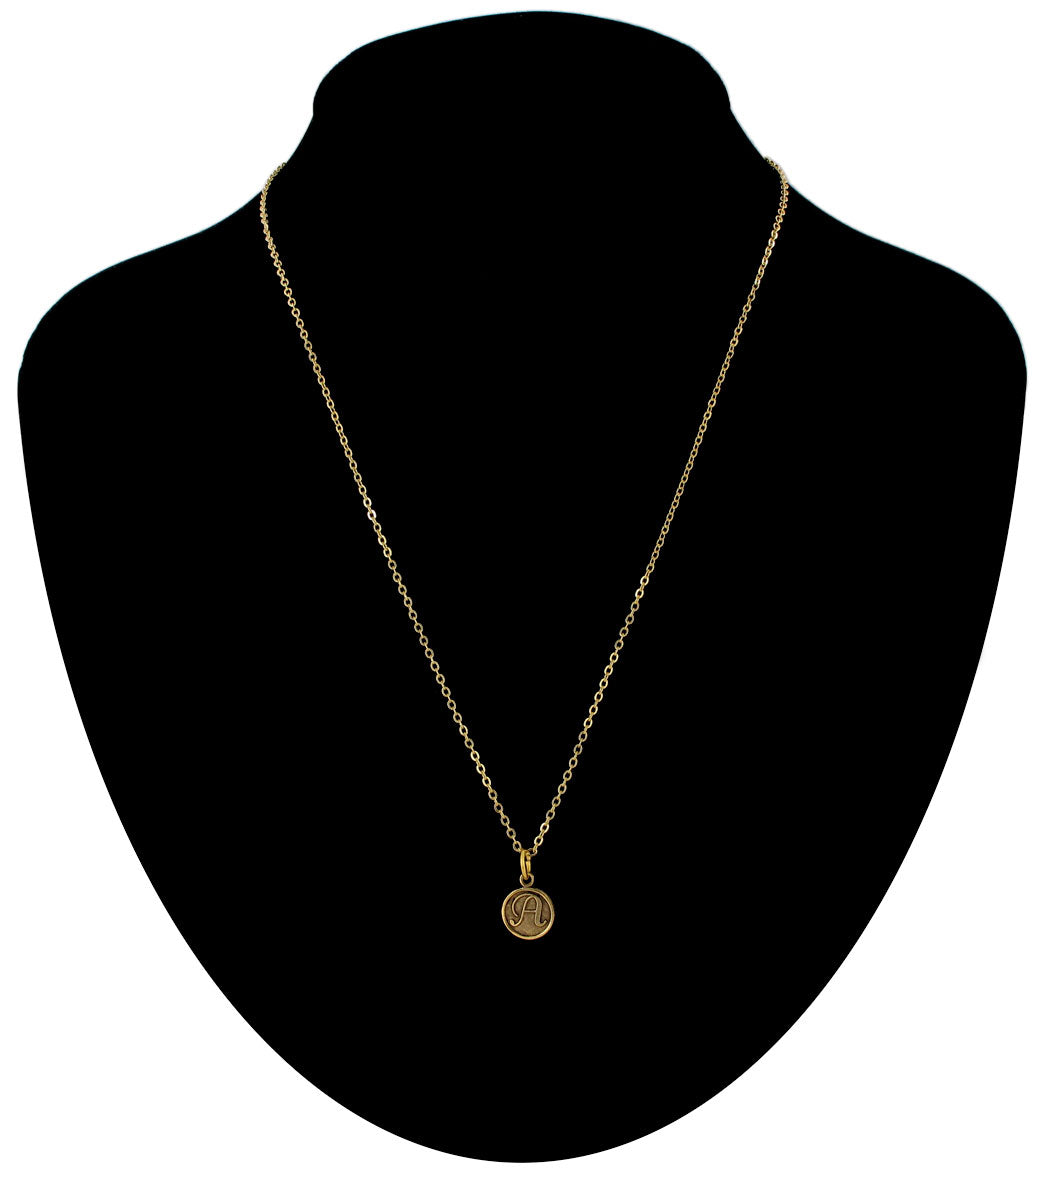 Ky & Co Gold Tone Cursive Initial "A" Charm Letter Pendant Chain Necklace 18"